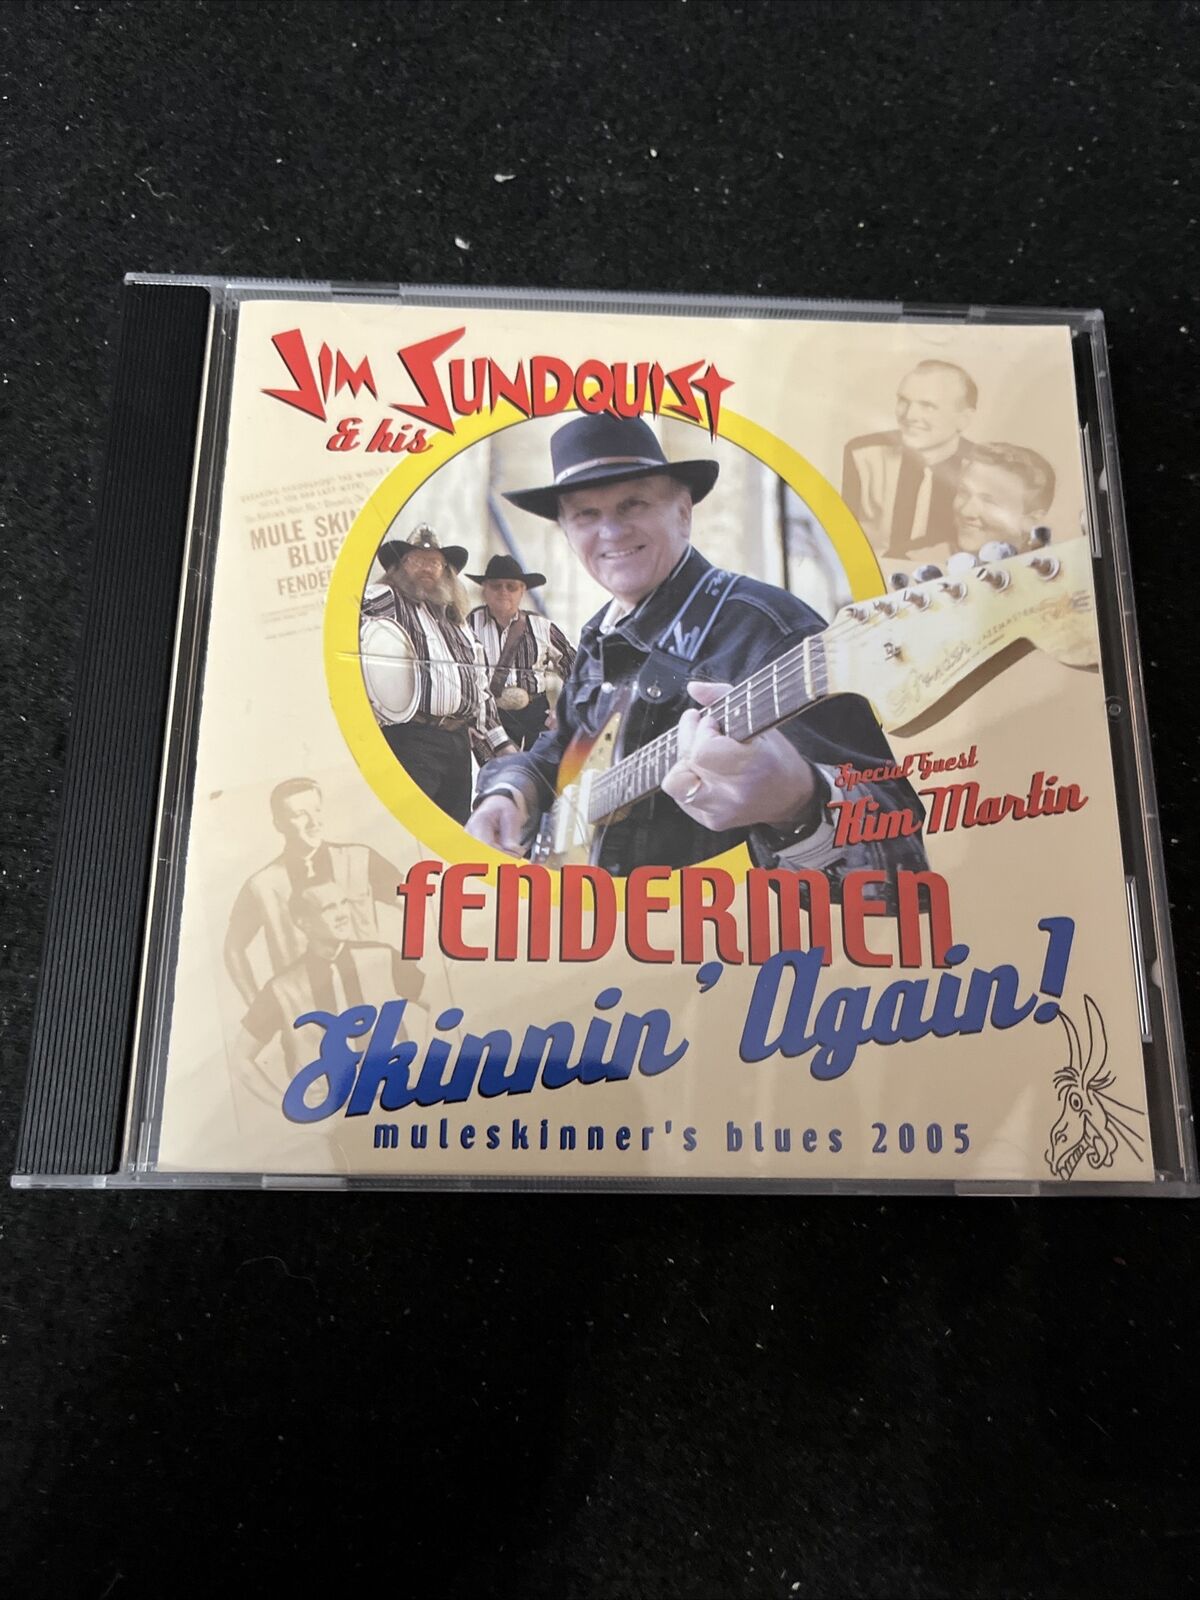 Jim Sundquist & his fendermen skinnin’ again CD Muleskinner’s Blues 2005 OOP